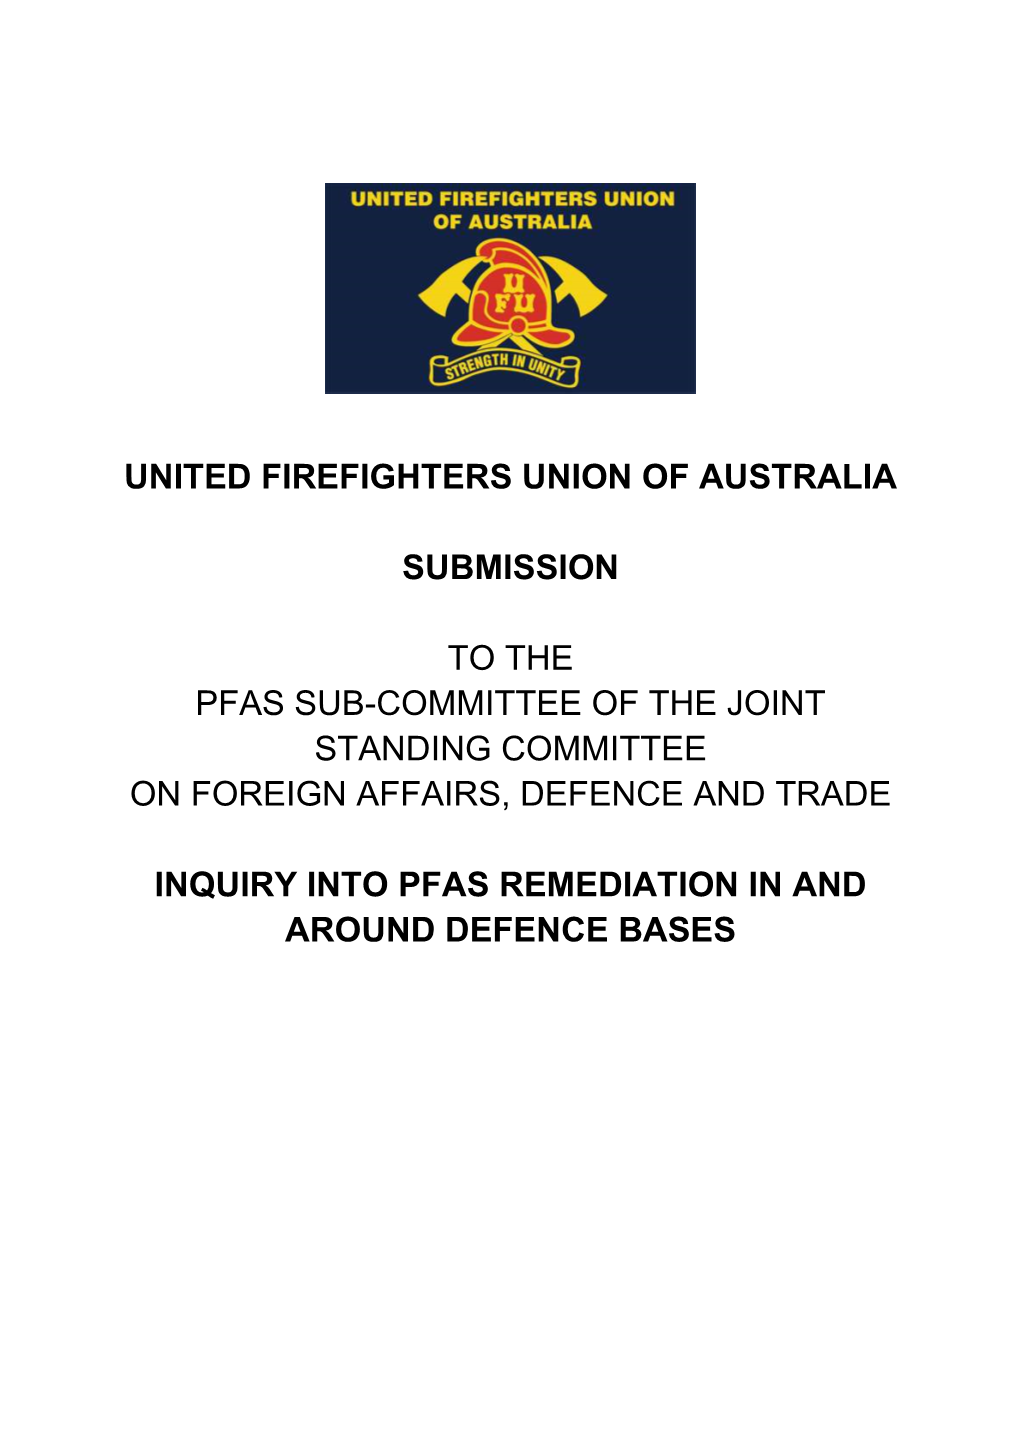 United Firefighters Union of Australia